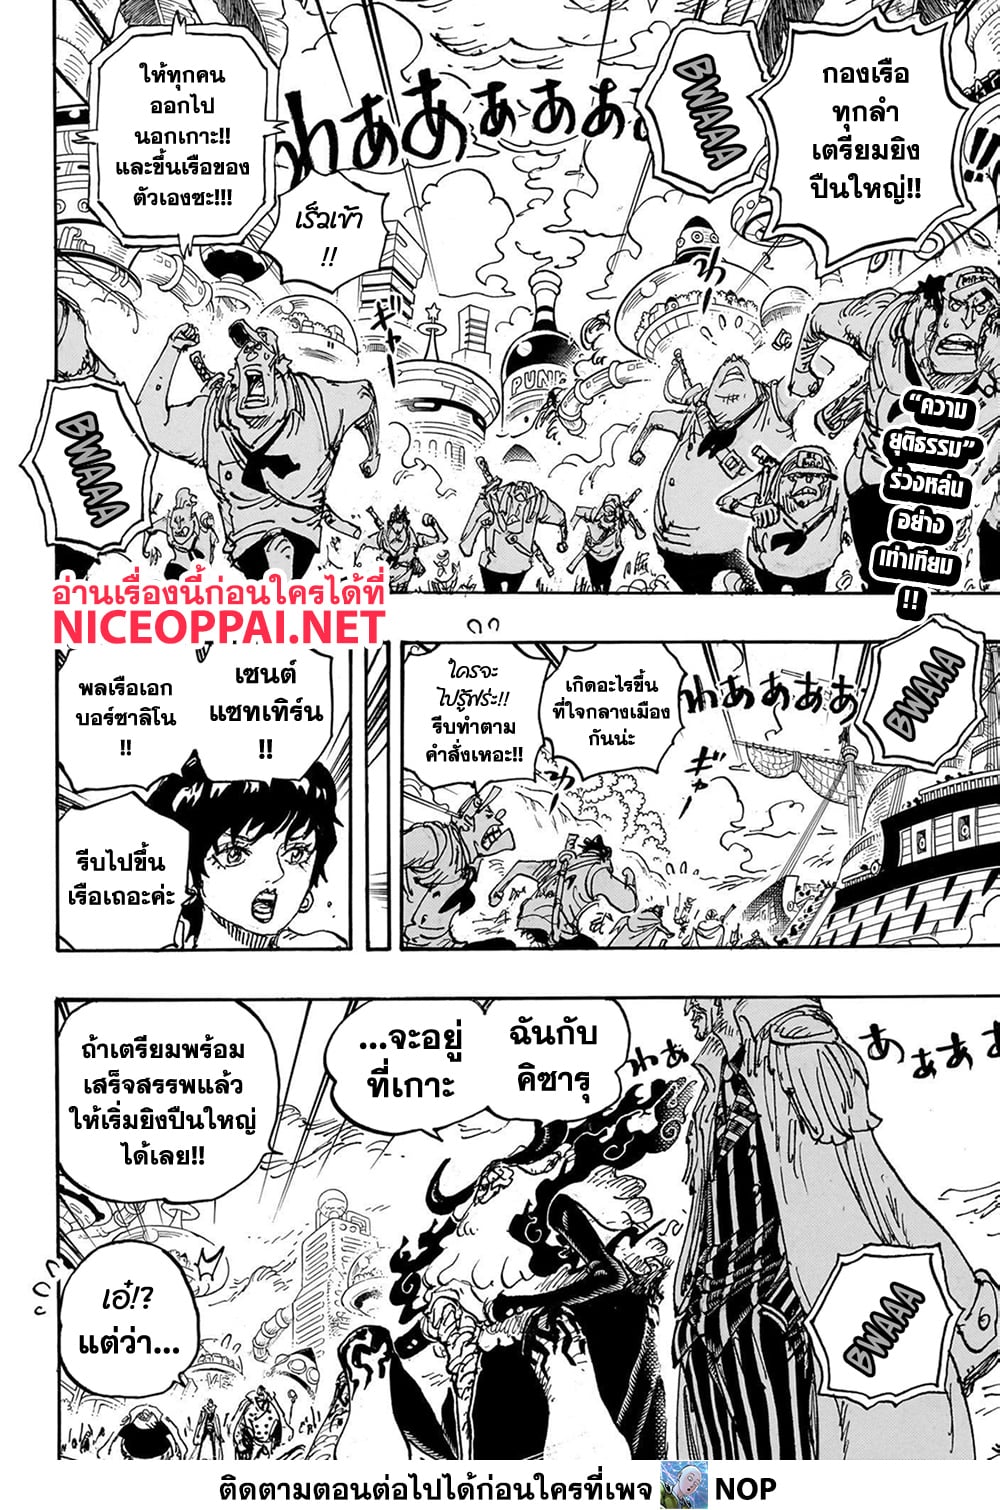 One Piece 1105 TH